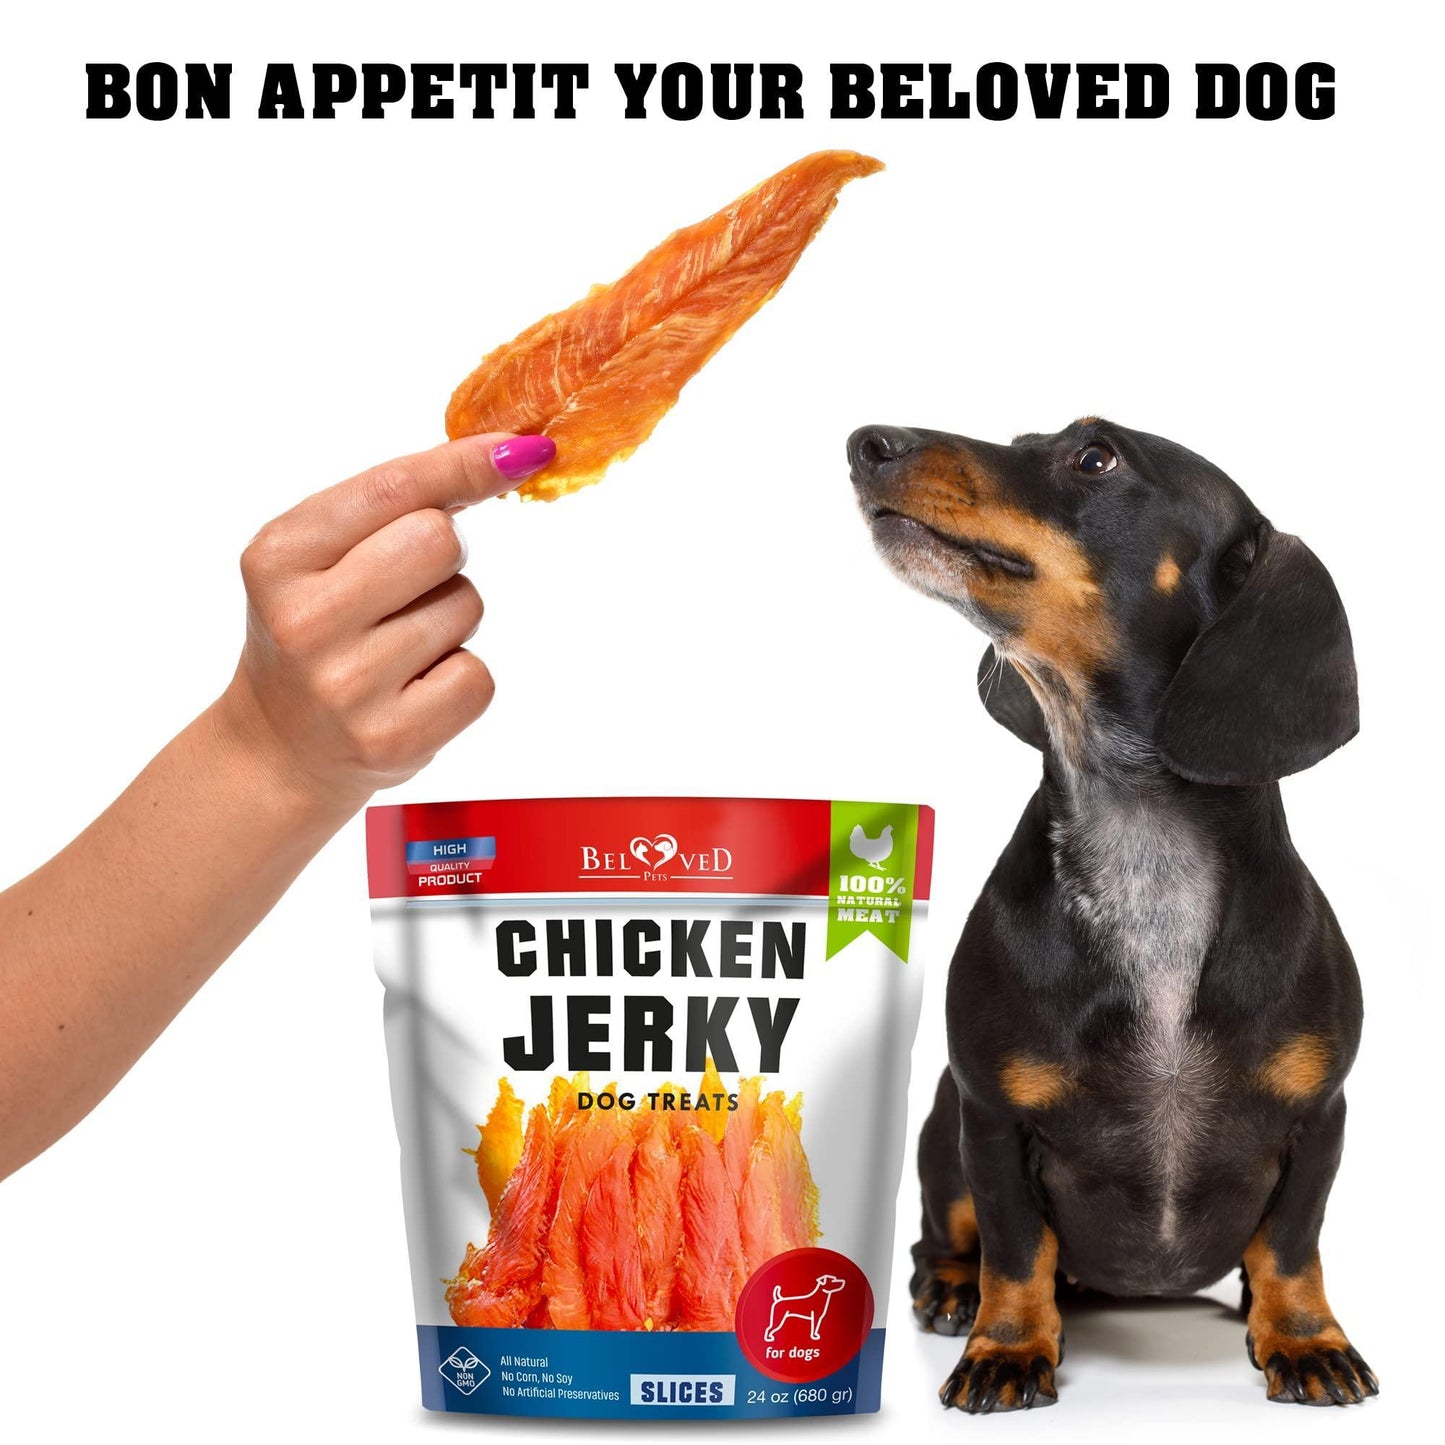 Chicken Jerky Dog Treats 1.5 Lb - 100% Natural & Grain Free